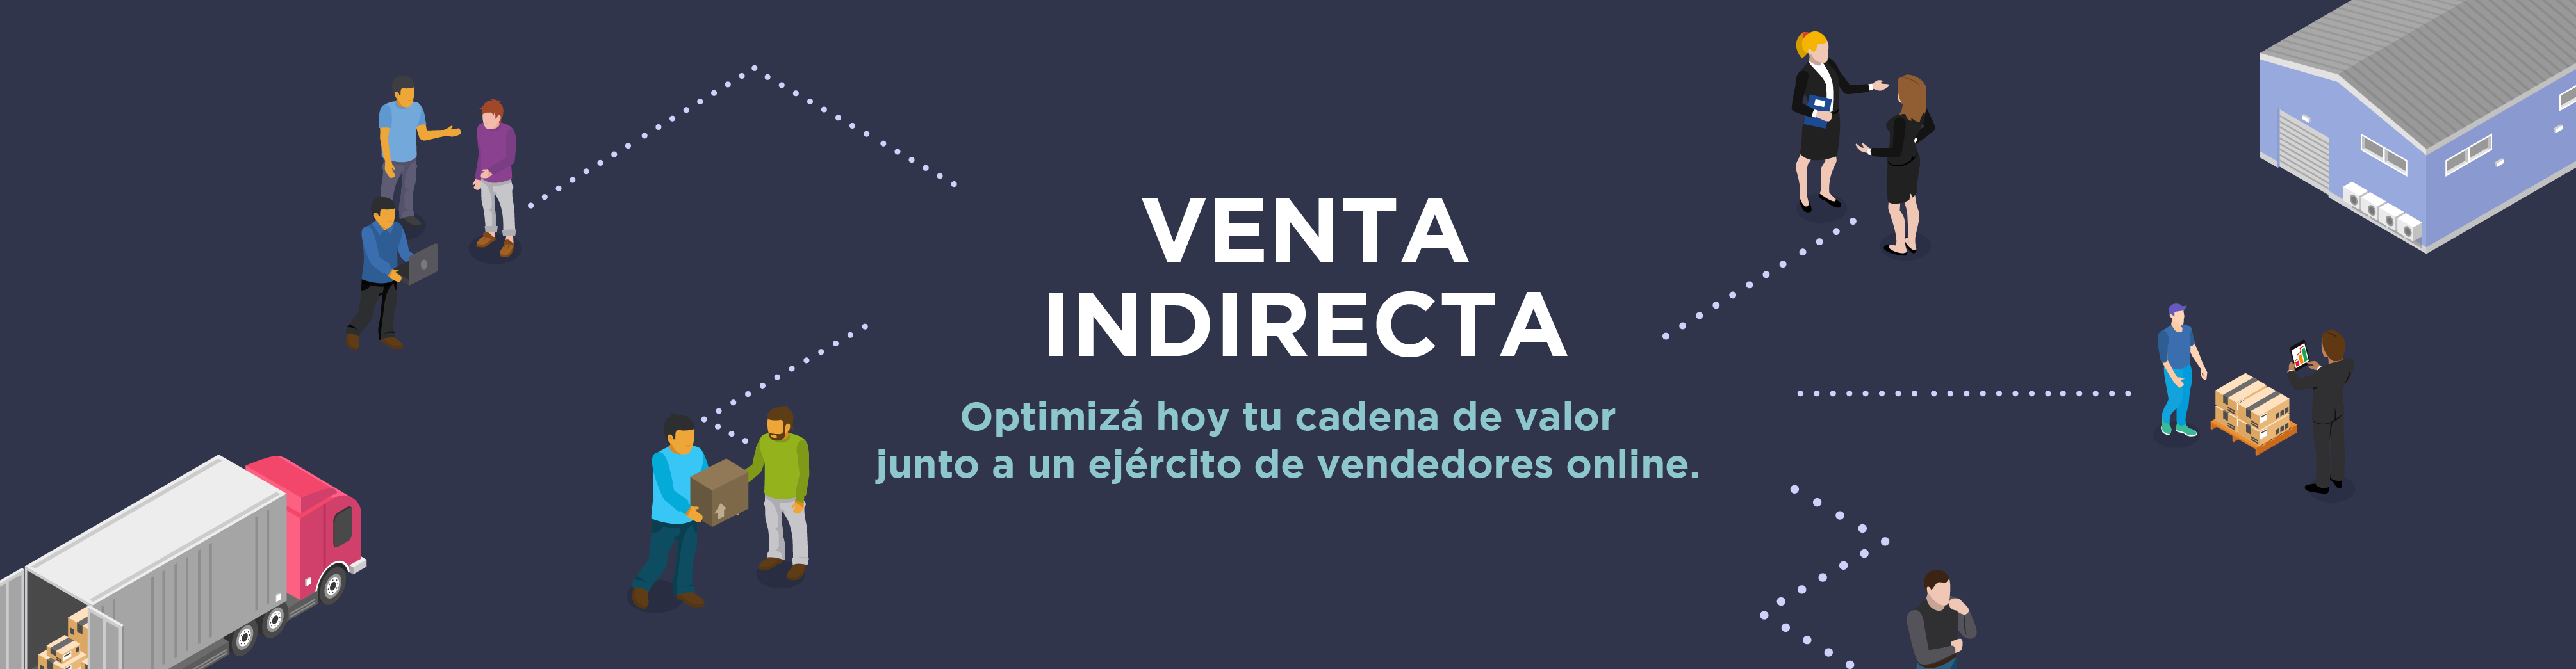 Venta indirecta_Landing_Principal-31